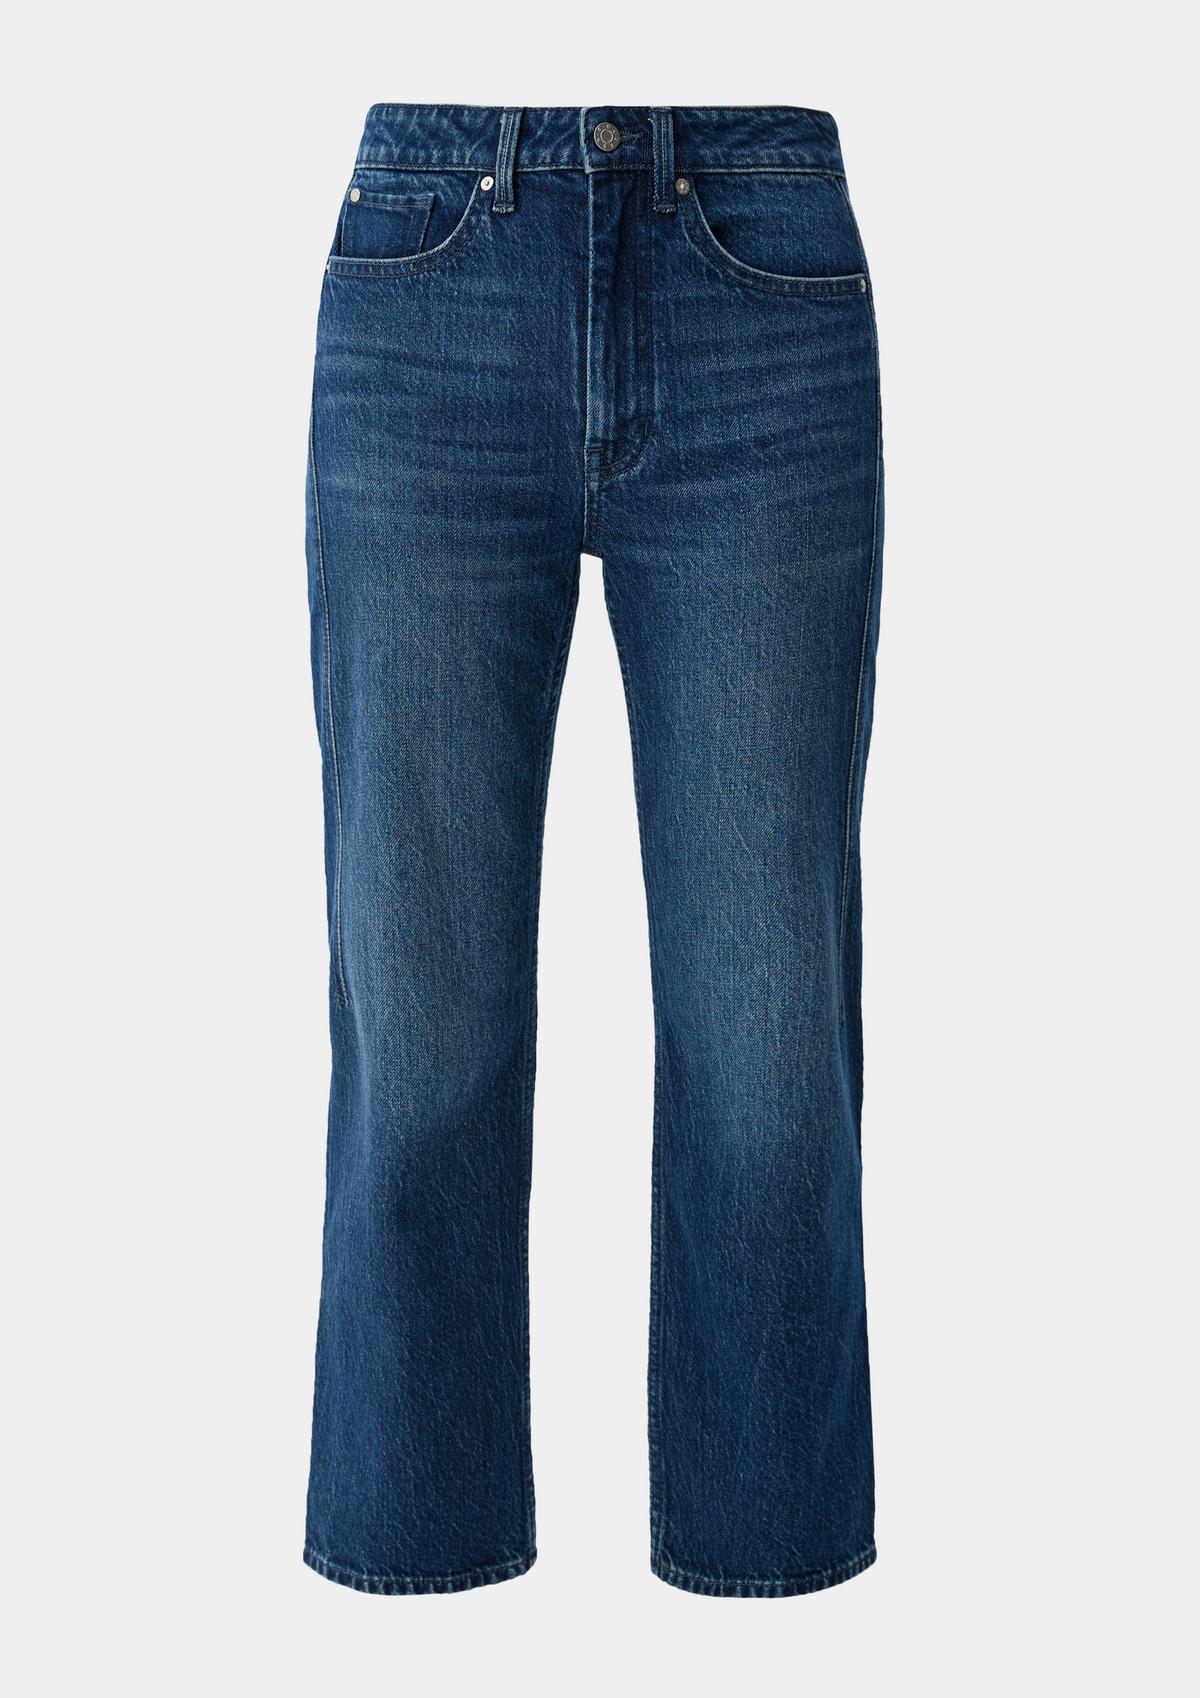 s.Oliver Regular: kratšie džínsy rovného strihu